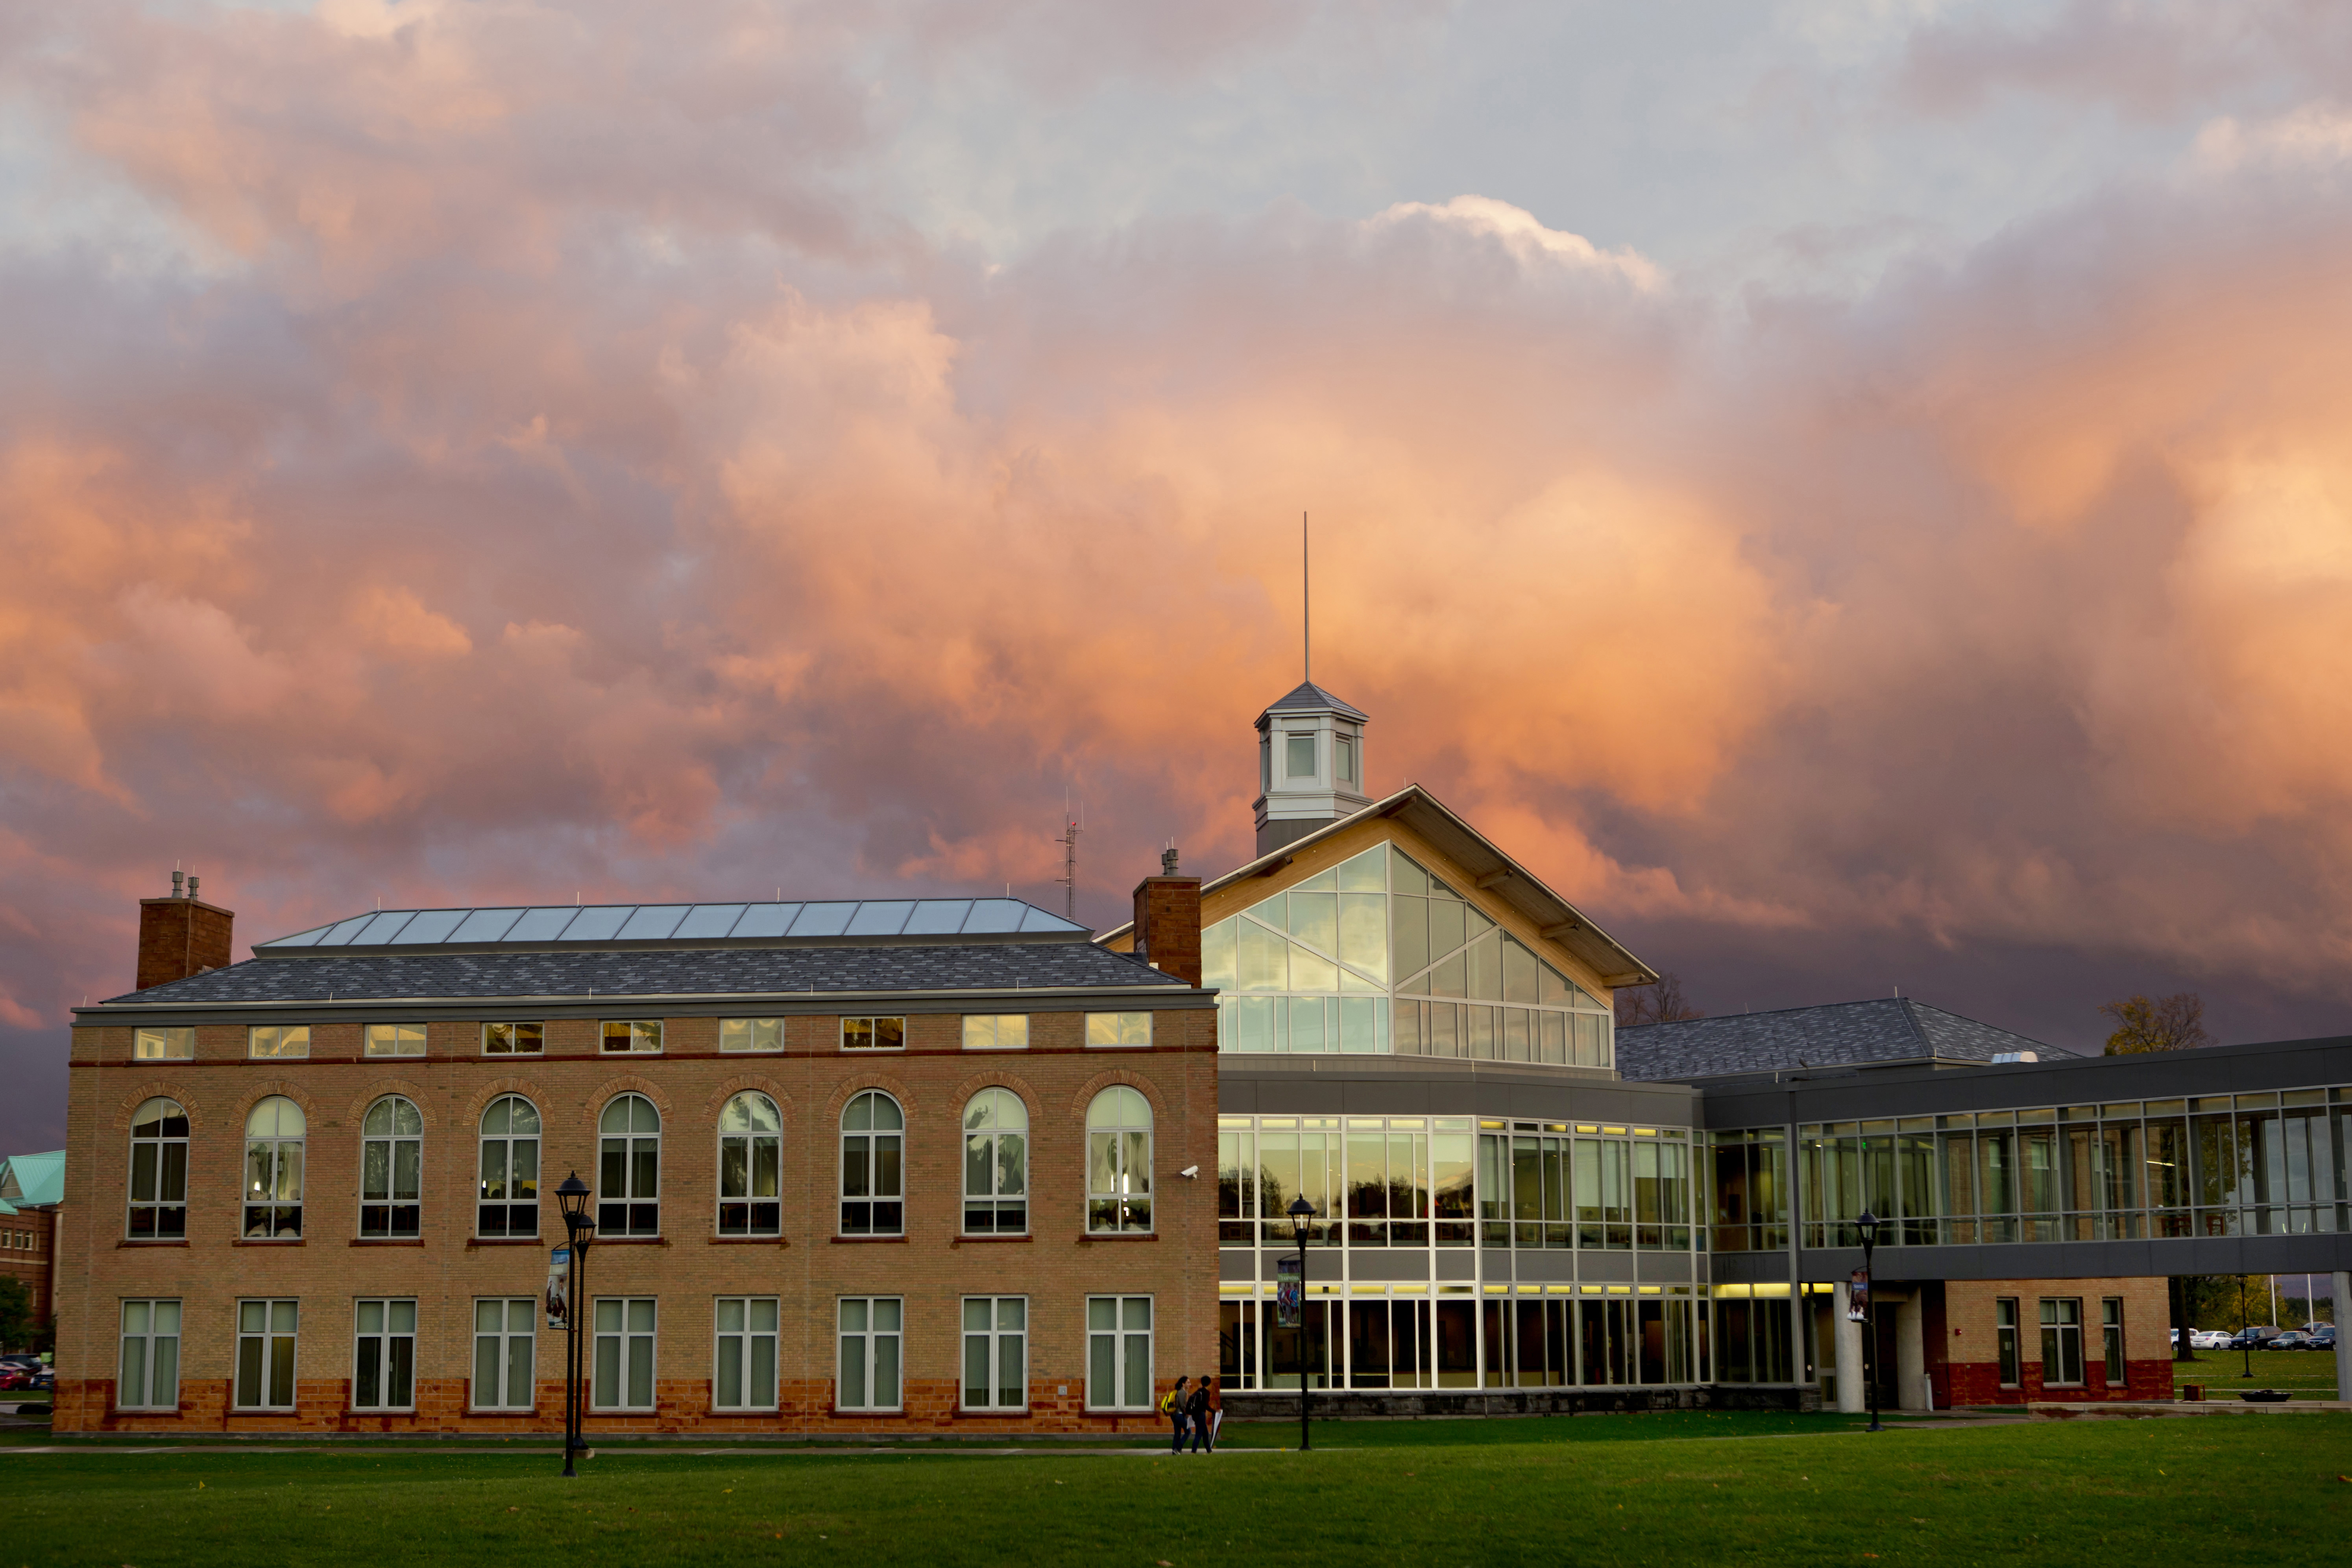 Sunset photo of Clarkson University's Student Center